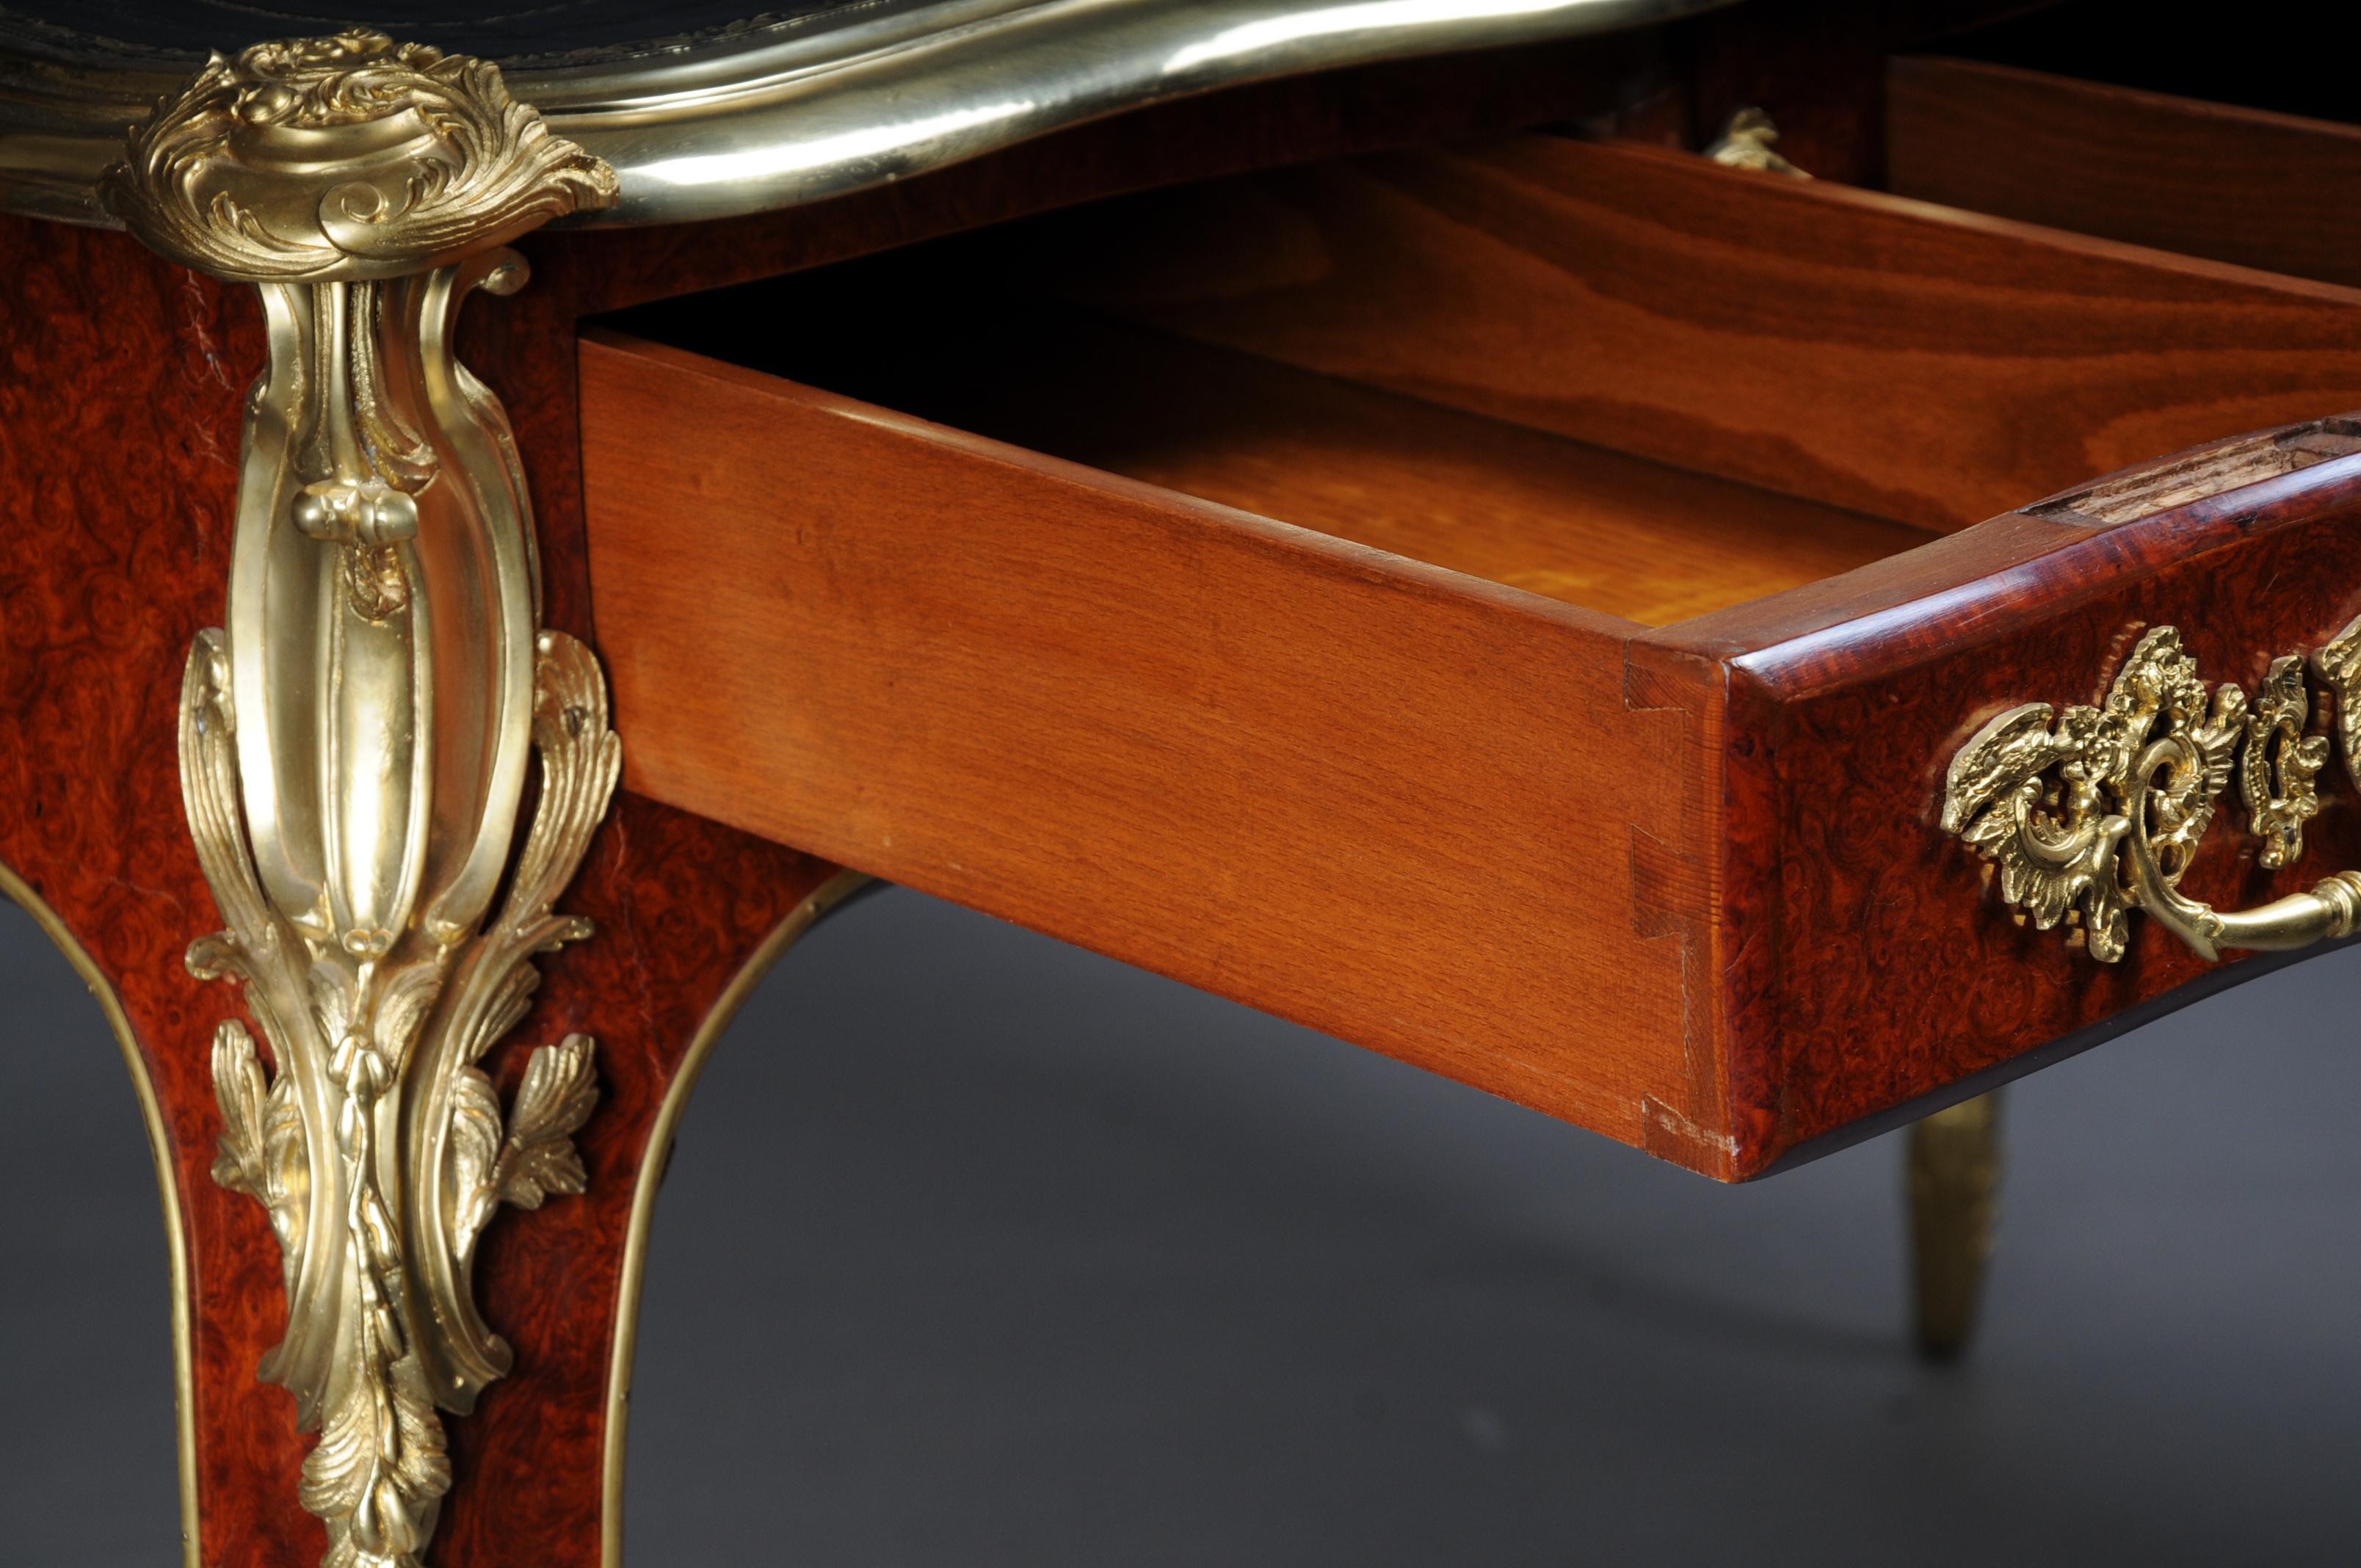 Royal desk / bureau plat in Louis XV style For Sale 1